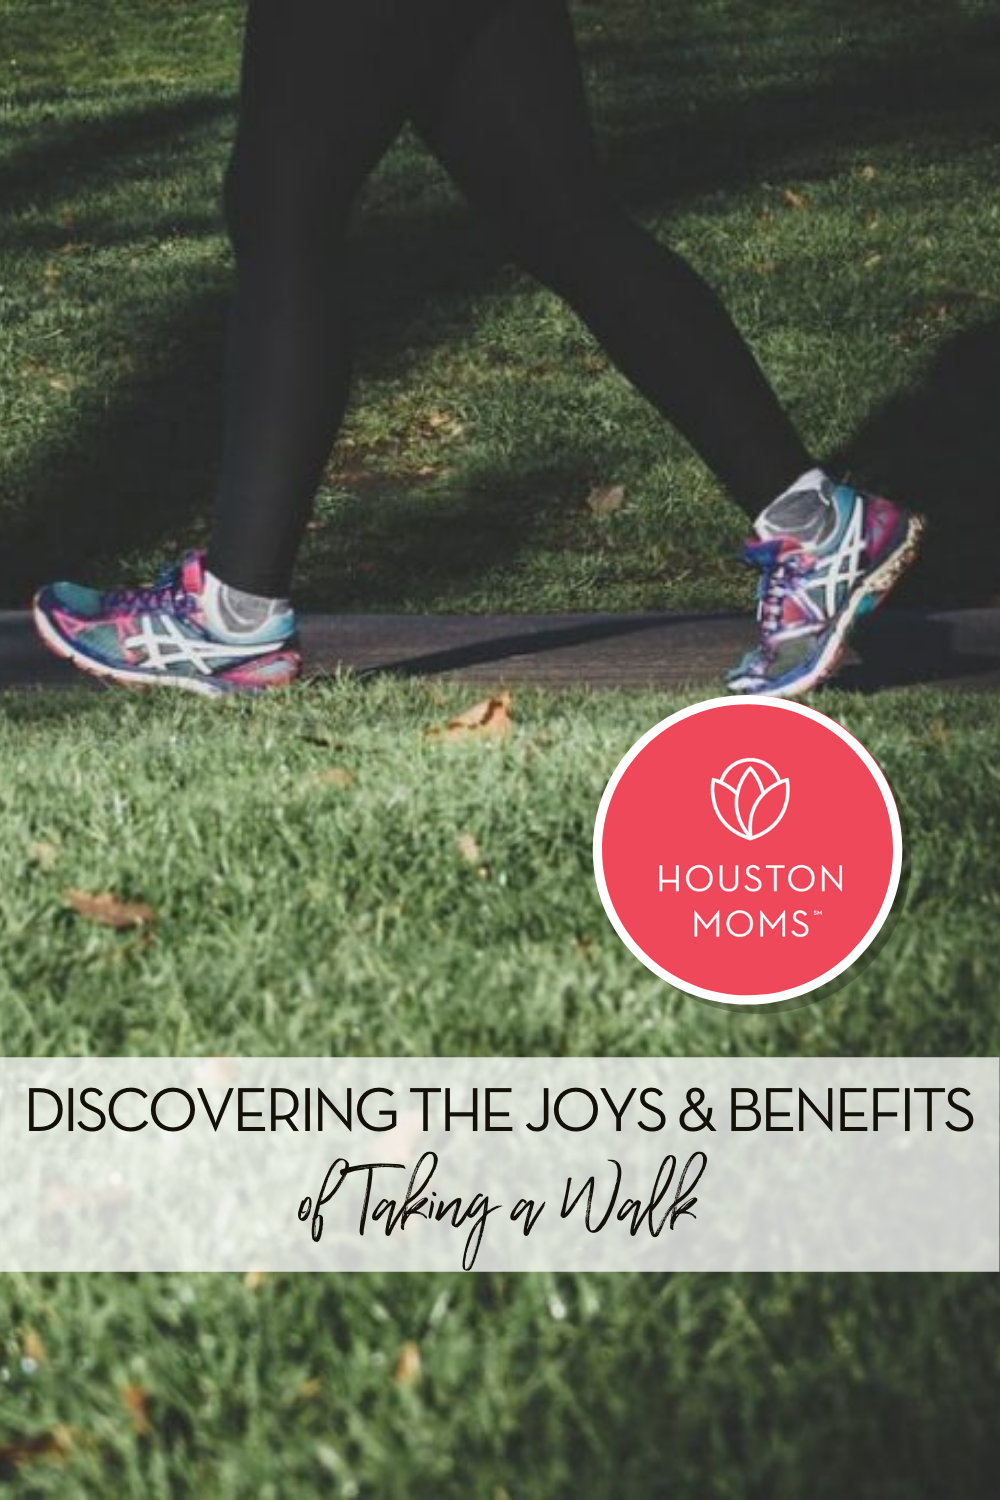 Houston Moms "Discovering the Joys & Benefits of Taking a Walk" #houstonmoms #momsaroundhouston